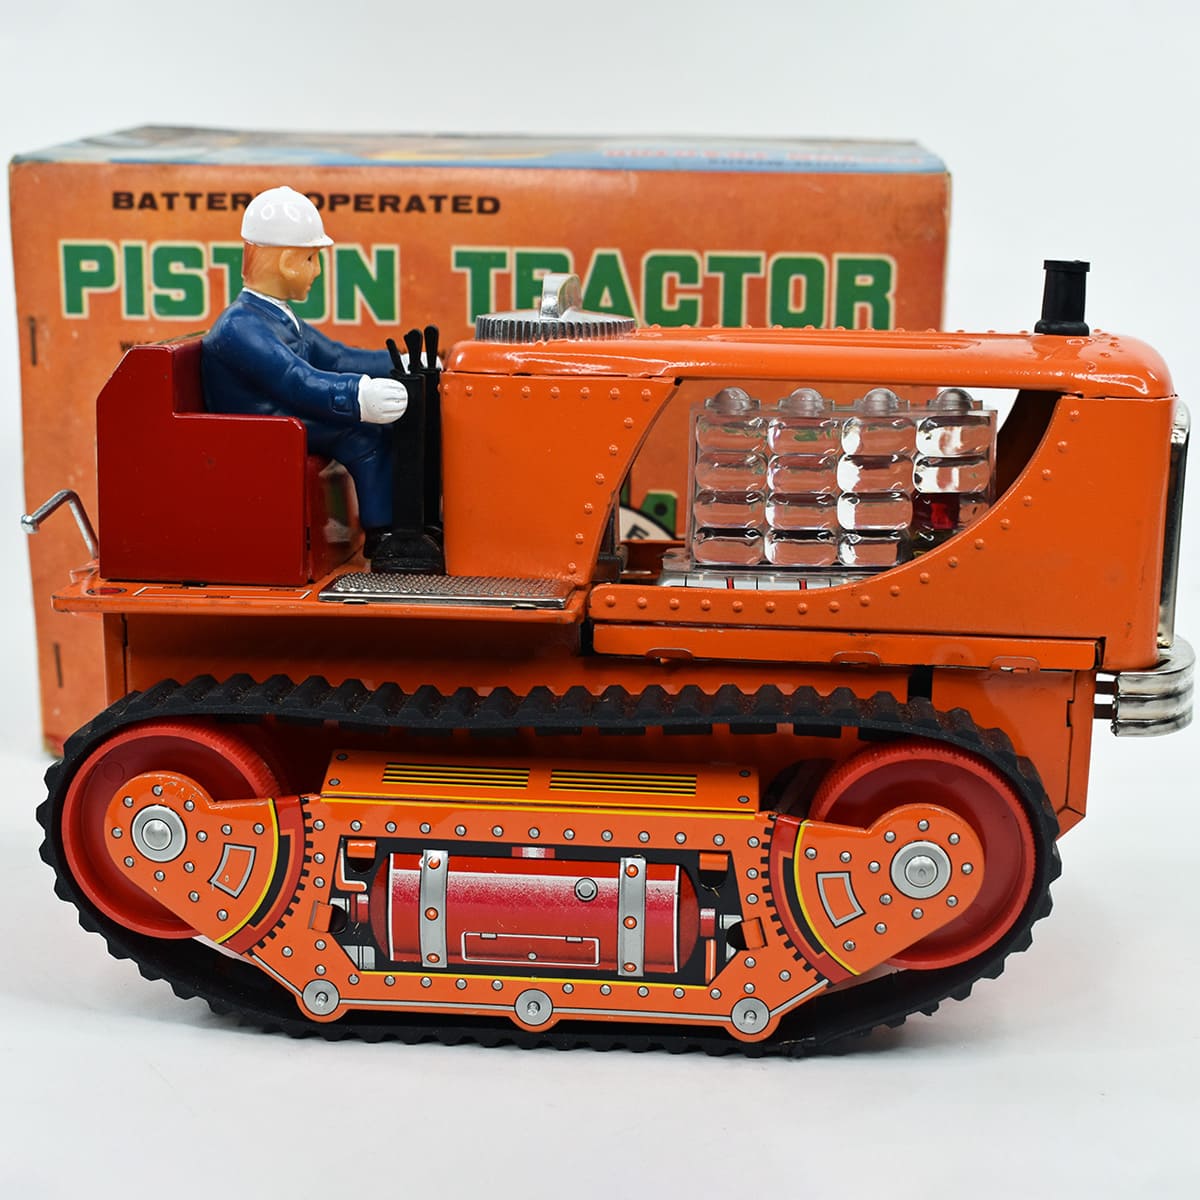 Nomura TN Piston Tractor Battery Operated